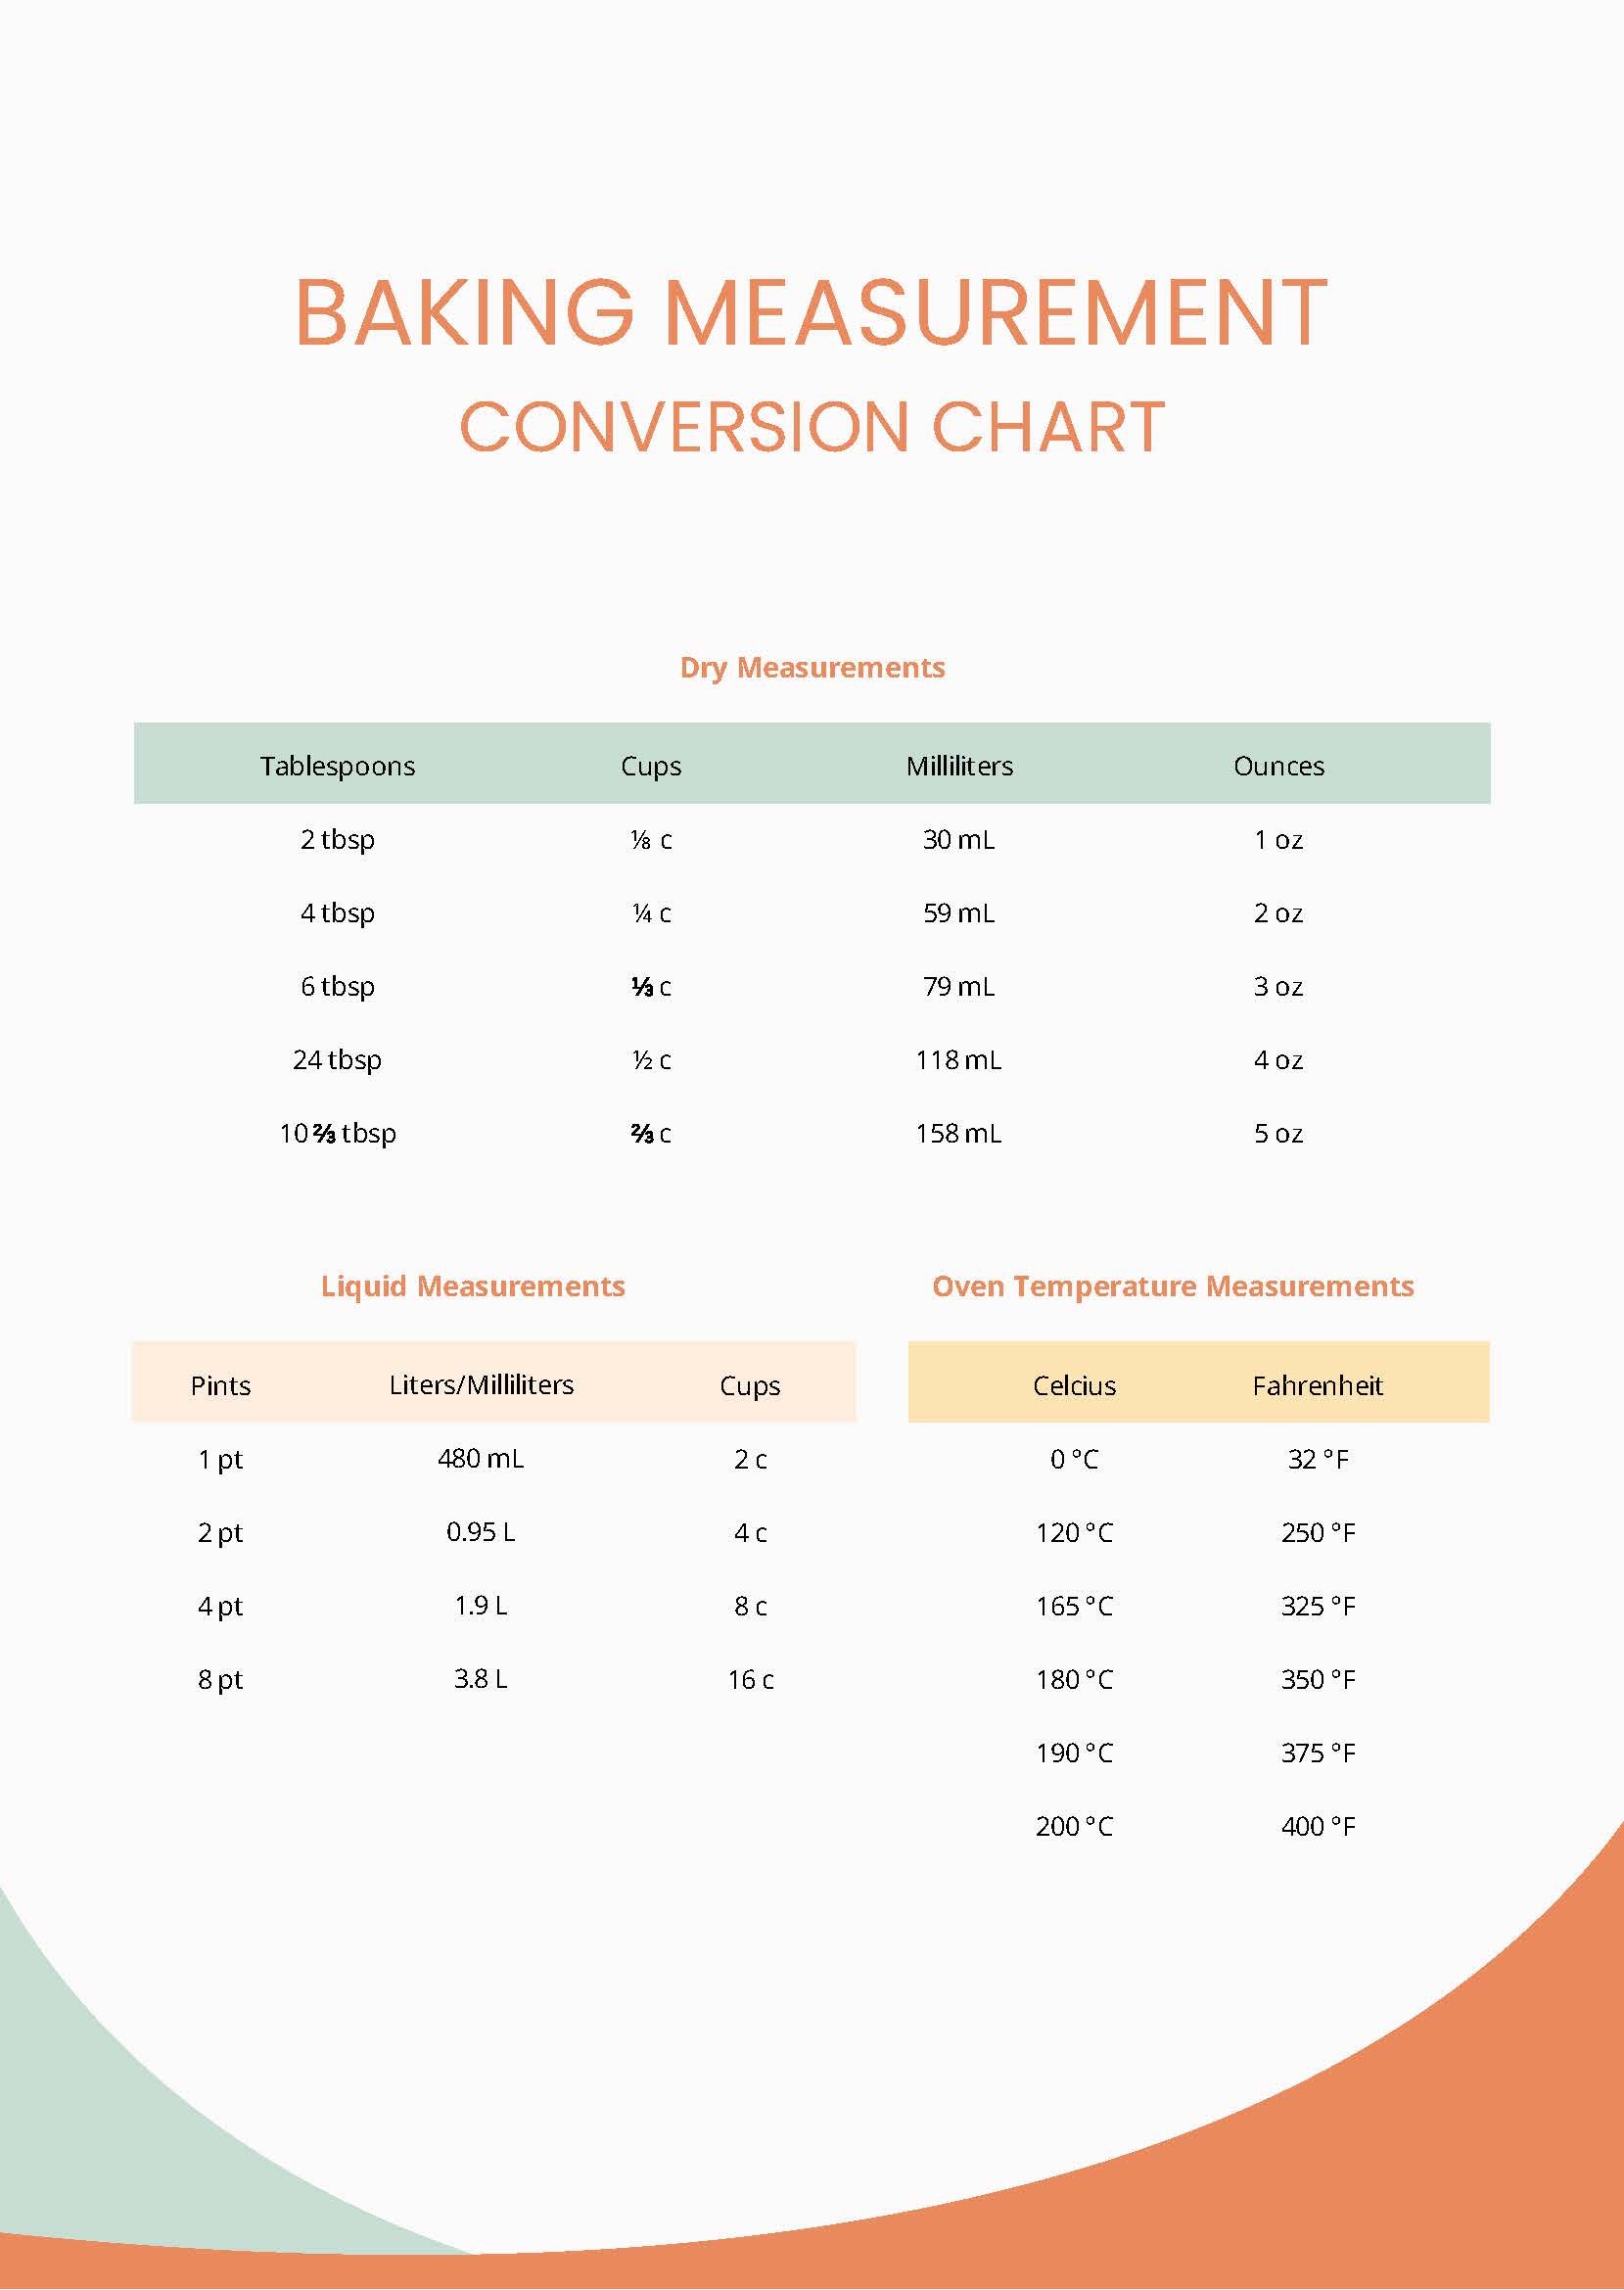 Baking Measurement Conversion Chart in PDF - Download | Template.net